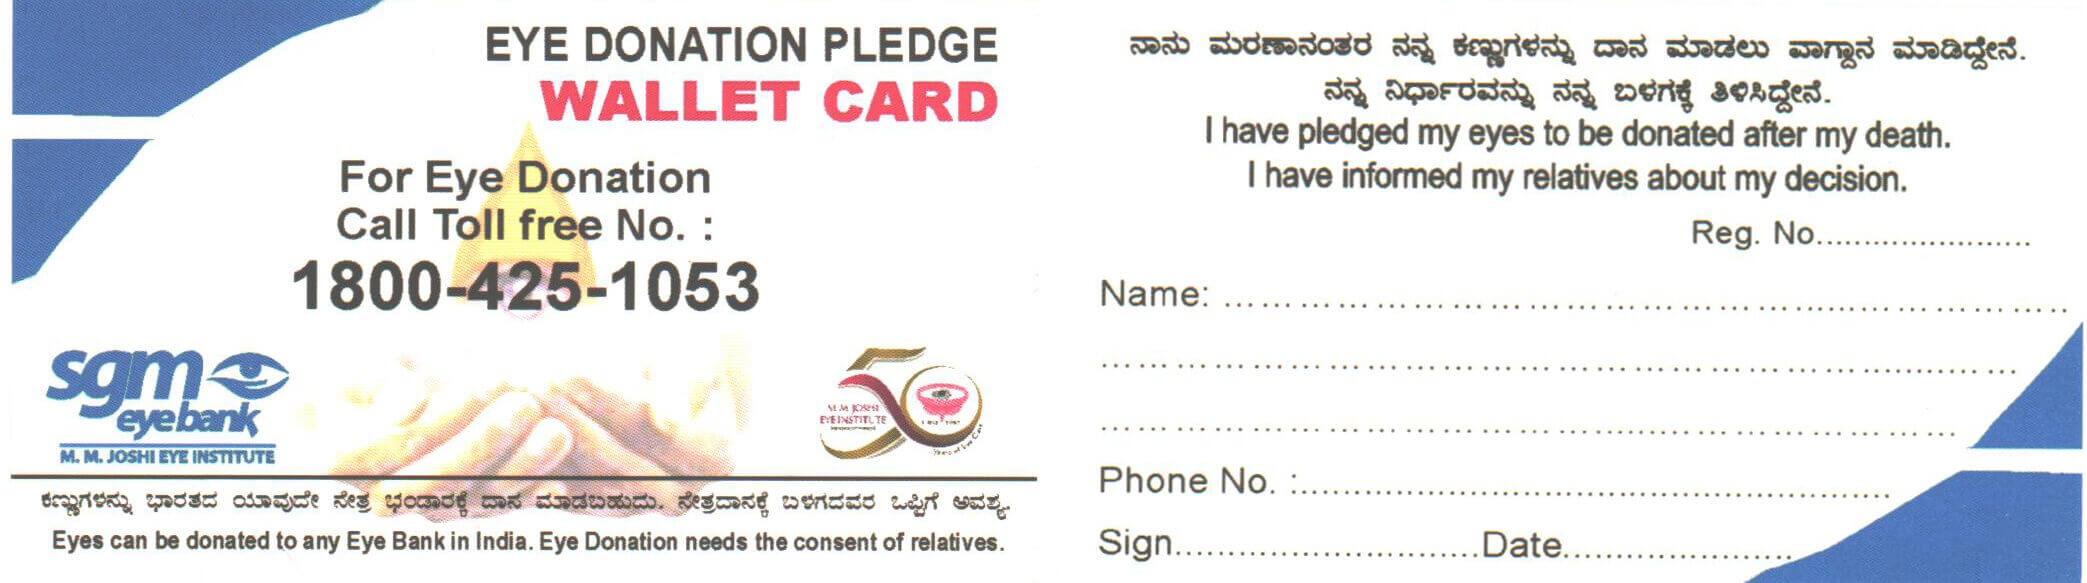 Eye Donation Pledge Card